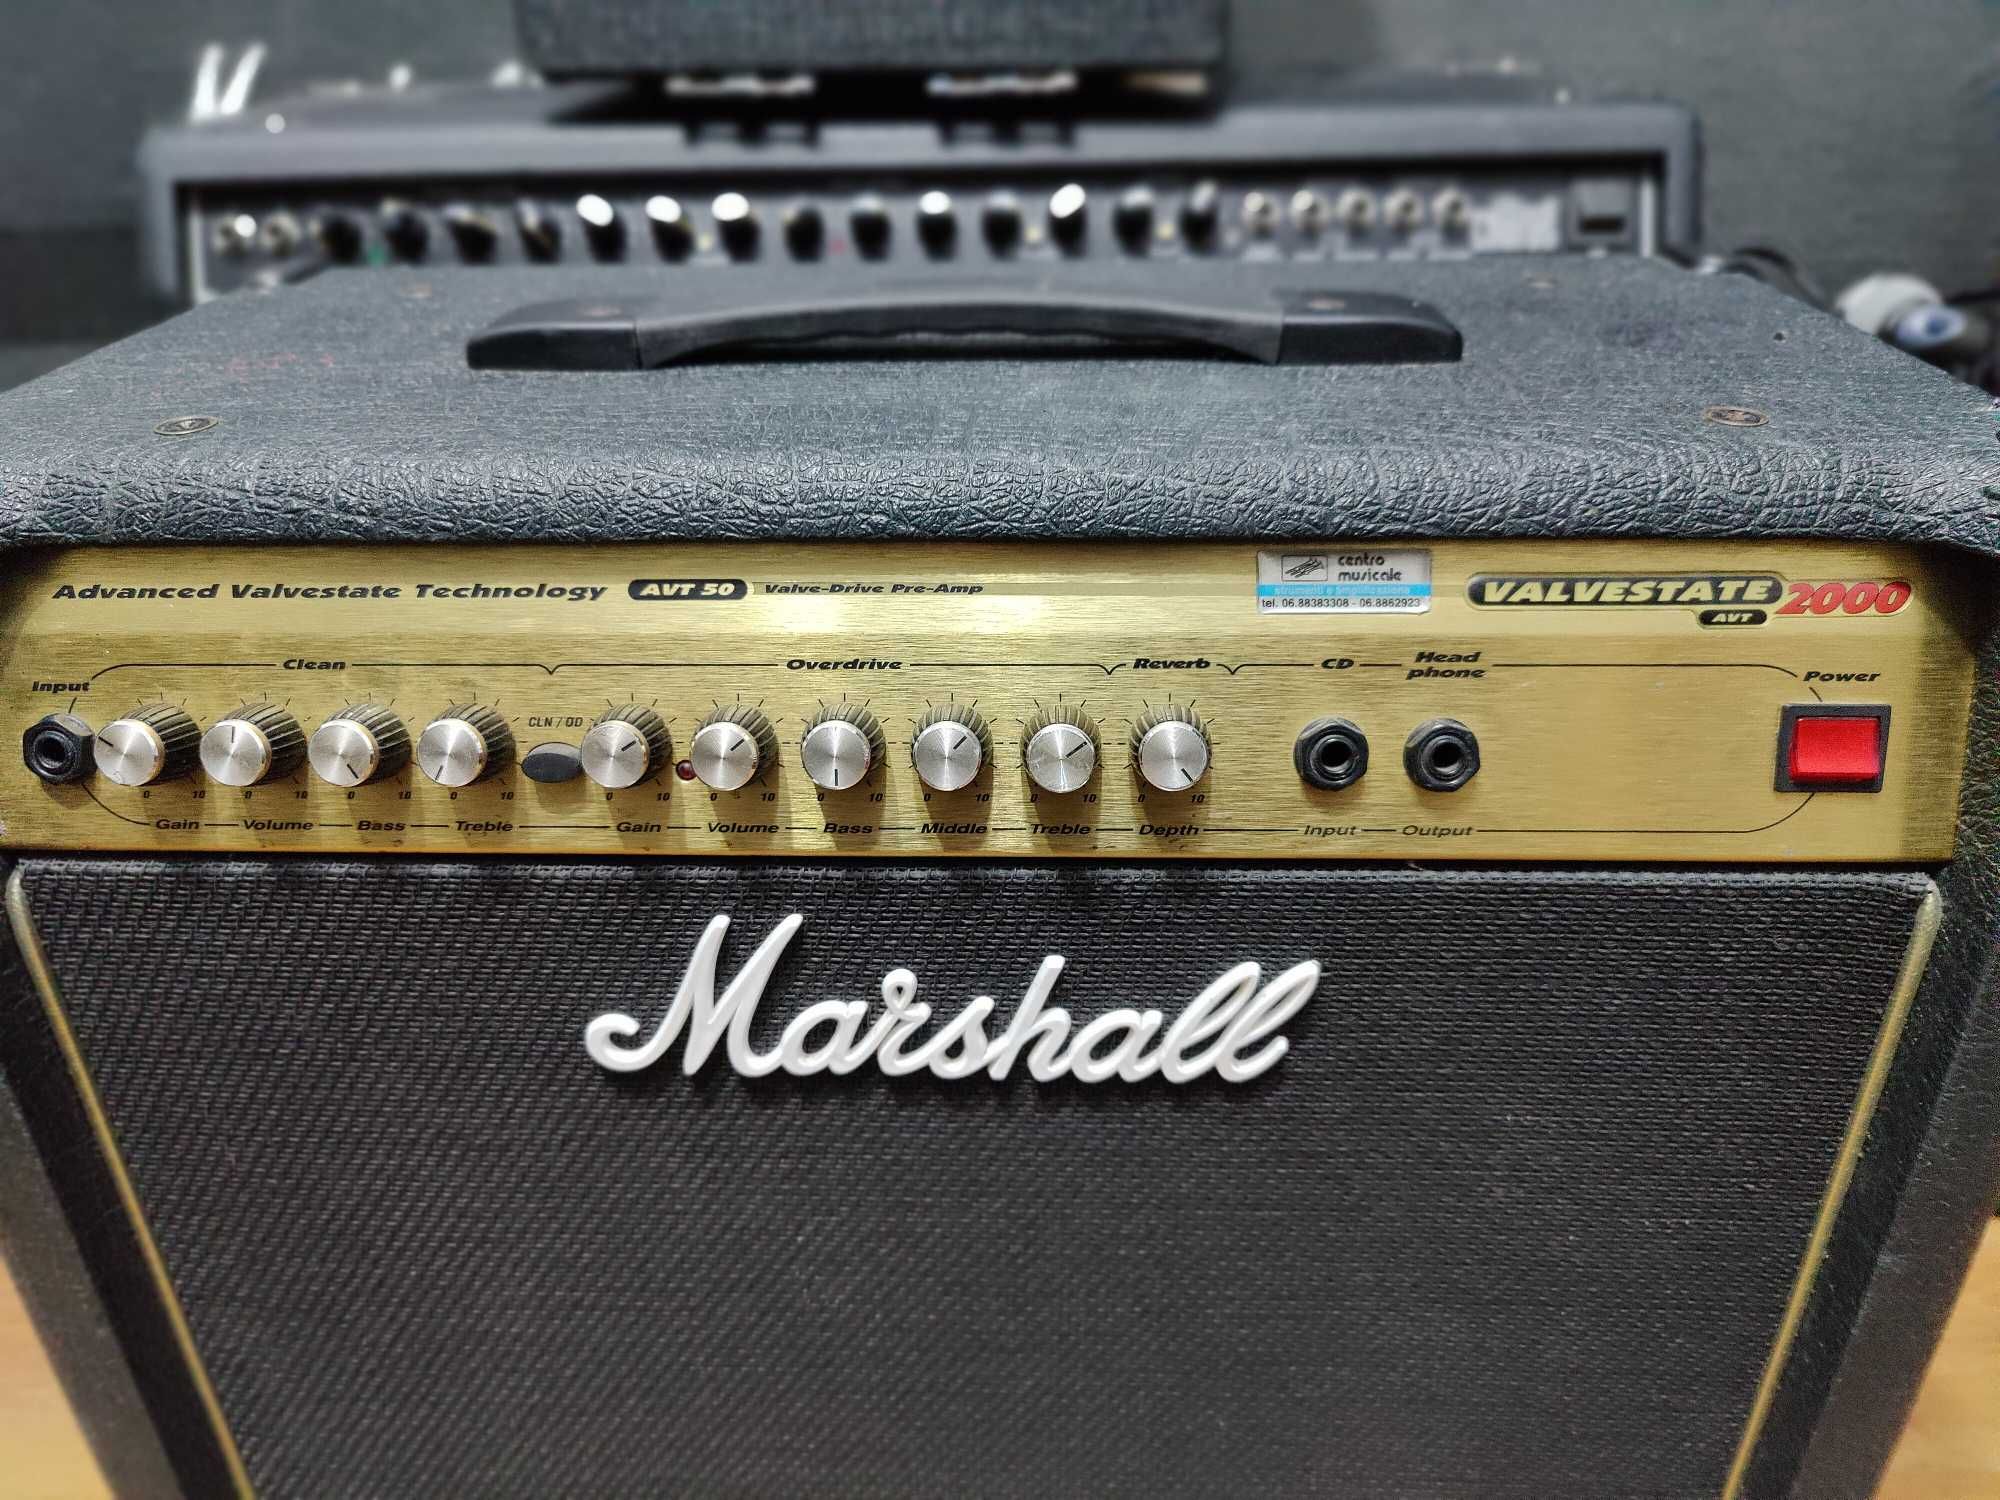 Marshall Valvestate 2000, AVT 50, amplif chitara